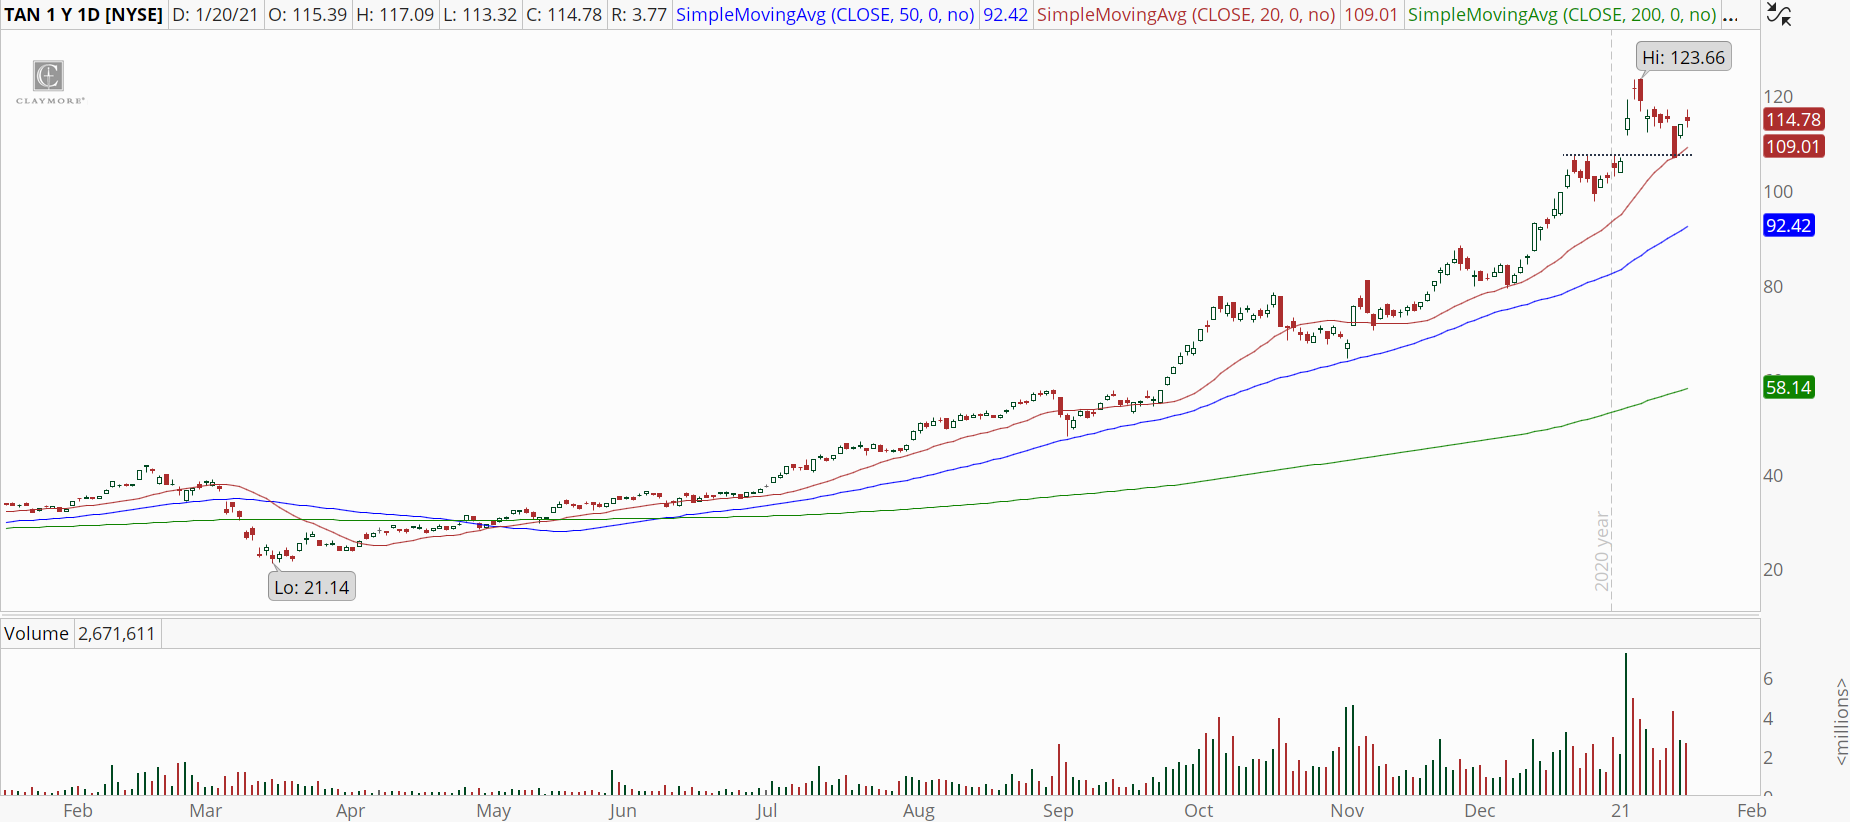 Solar ETF (TAN) stock chart with bull retracement